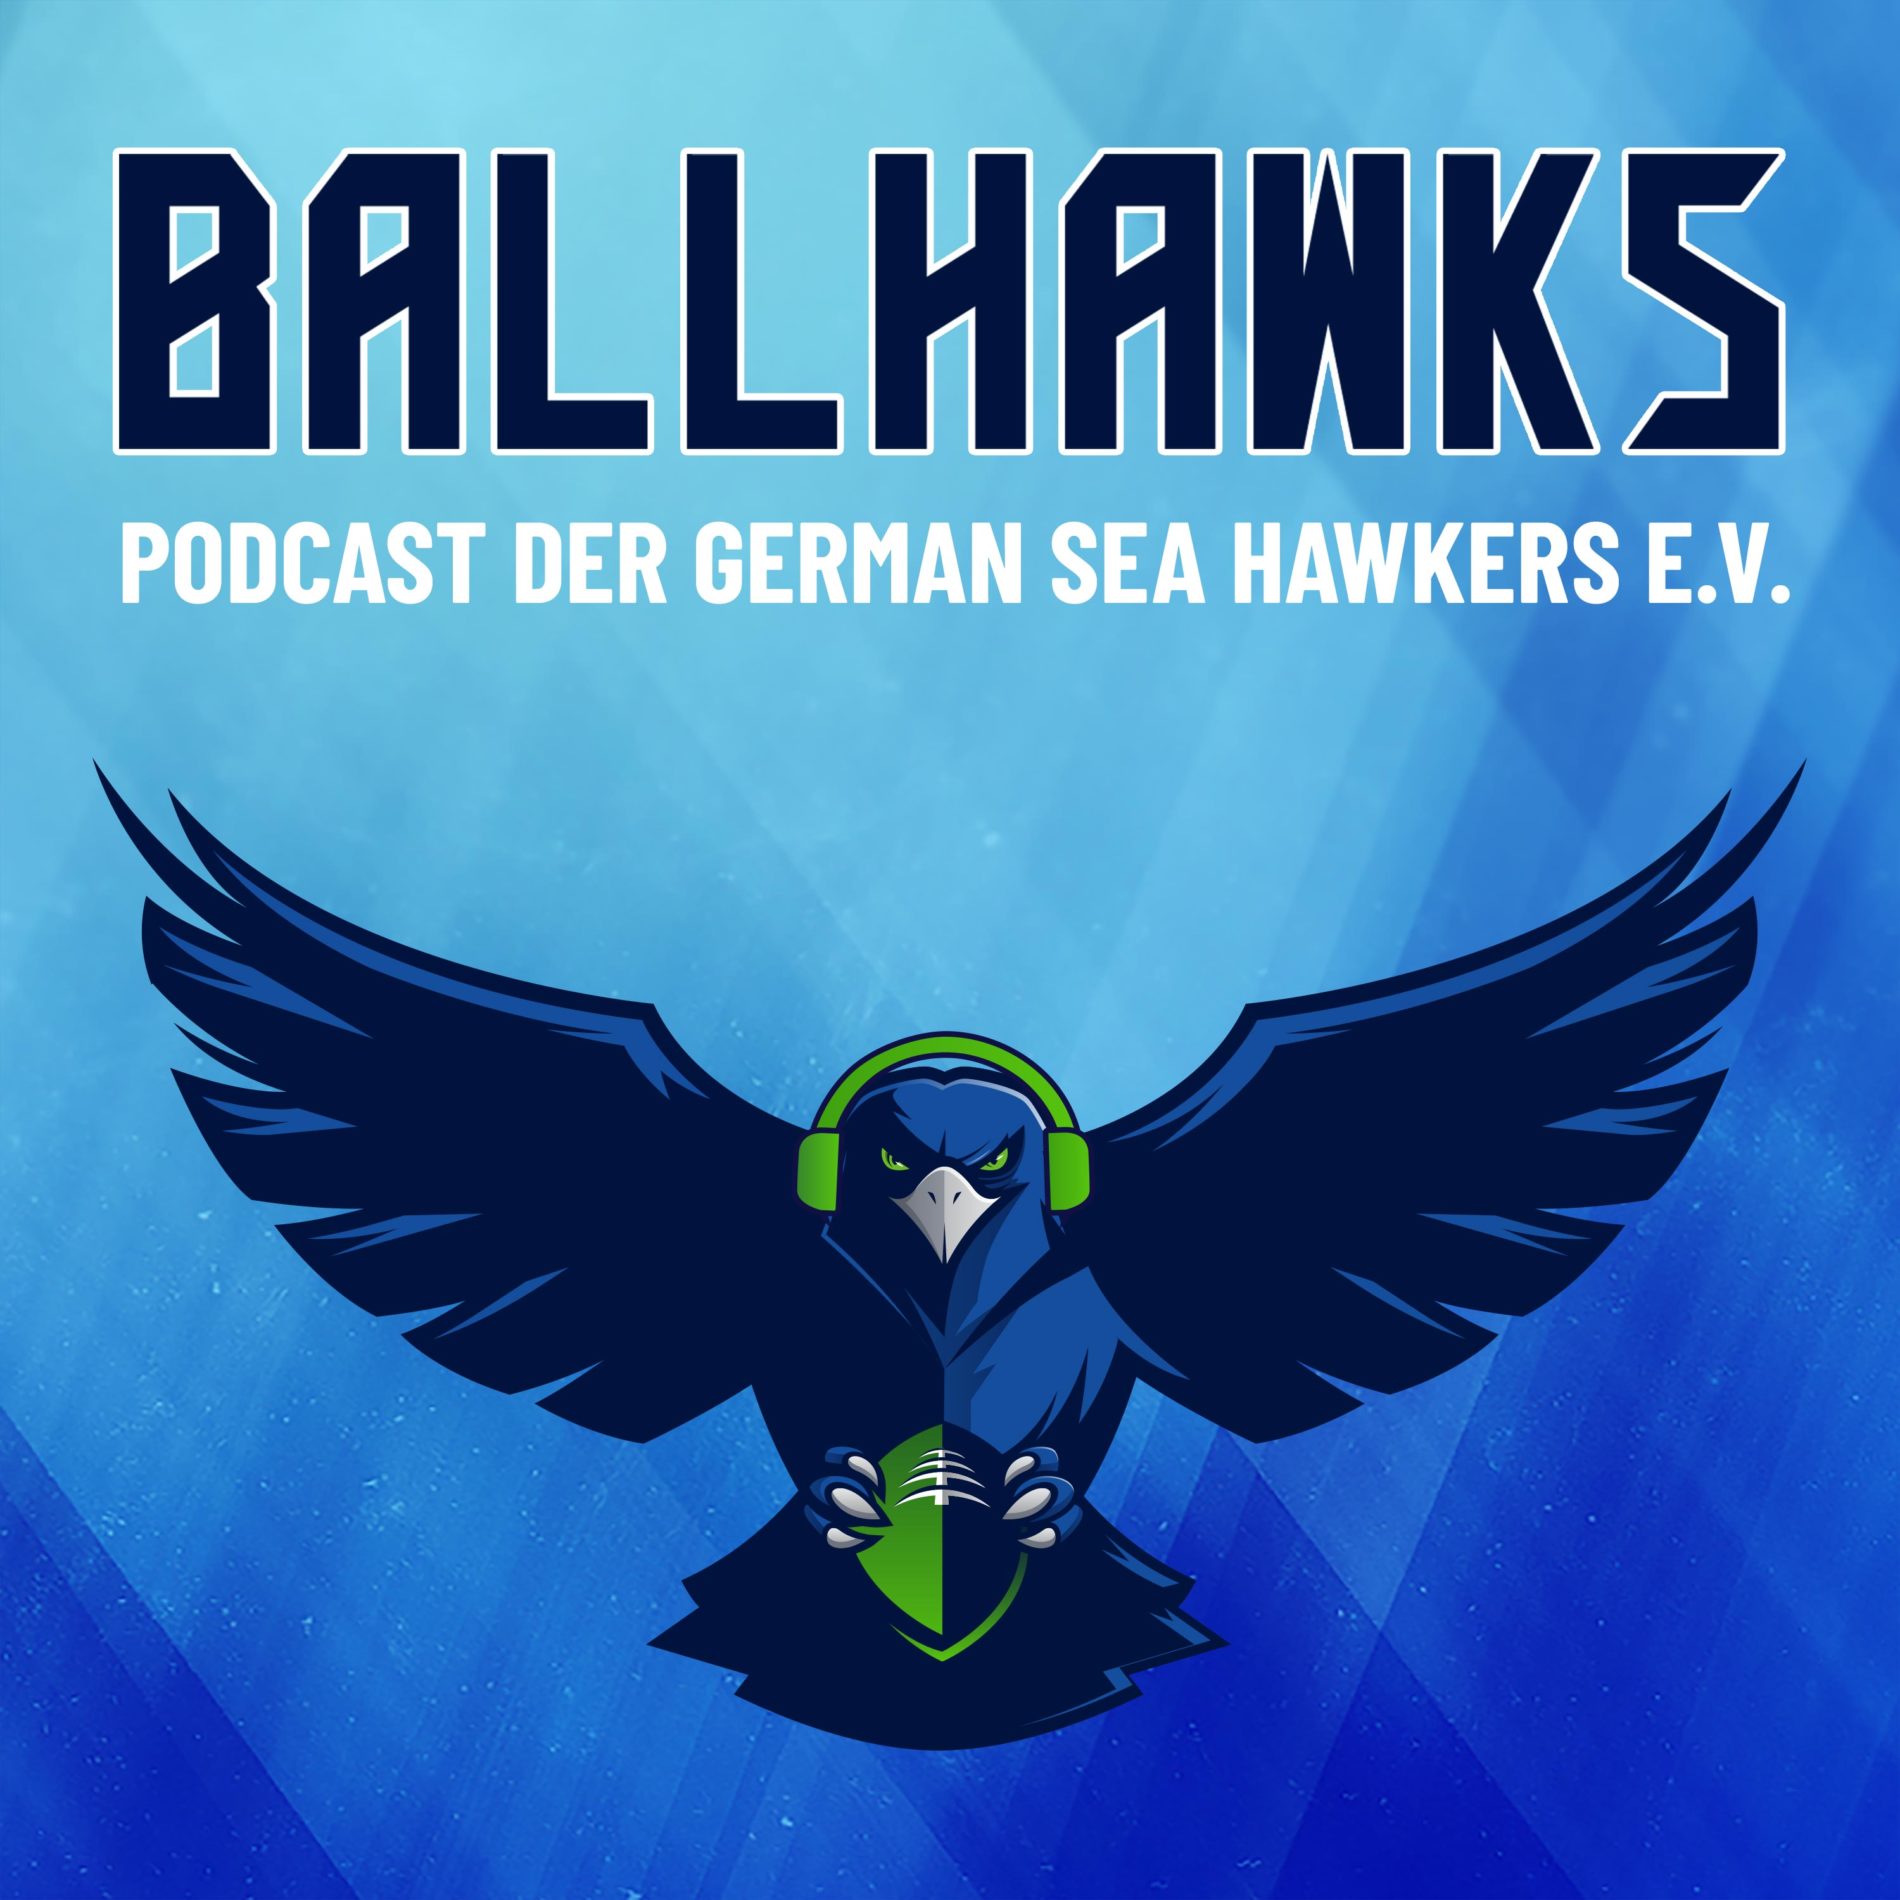 Ballhawks – Podcast der German Sea Hawkers e.V.